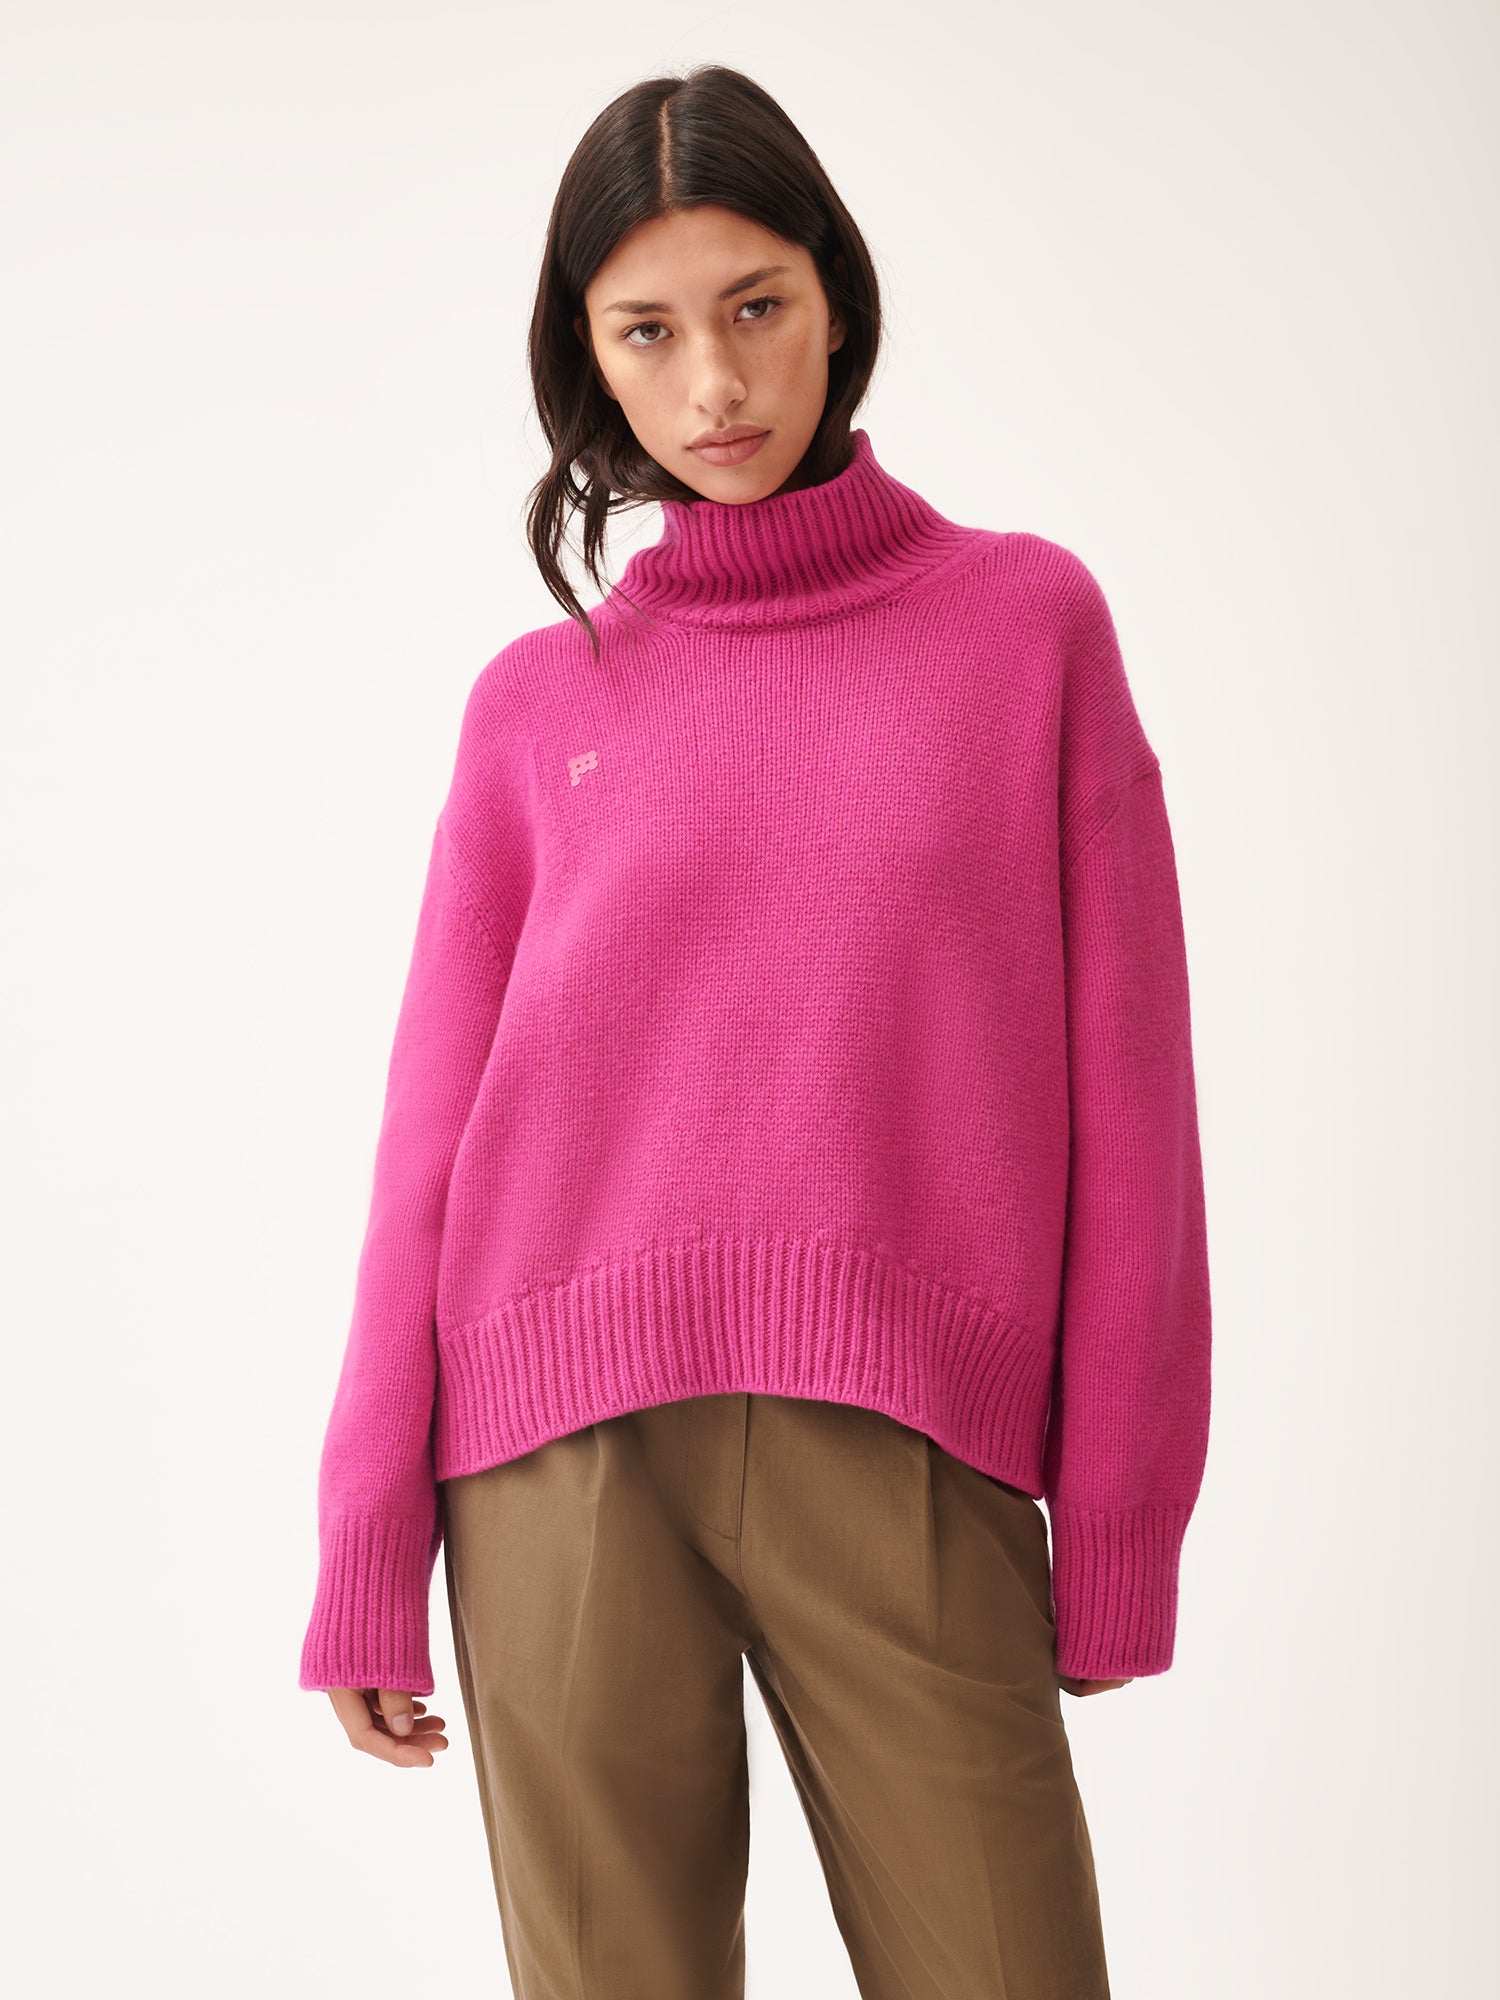 Women's turtleneck sweater, White modal cashmere turtleneck sweater